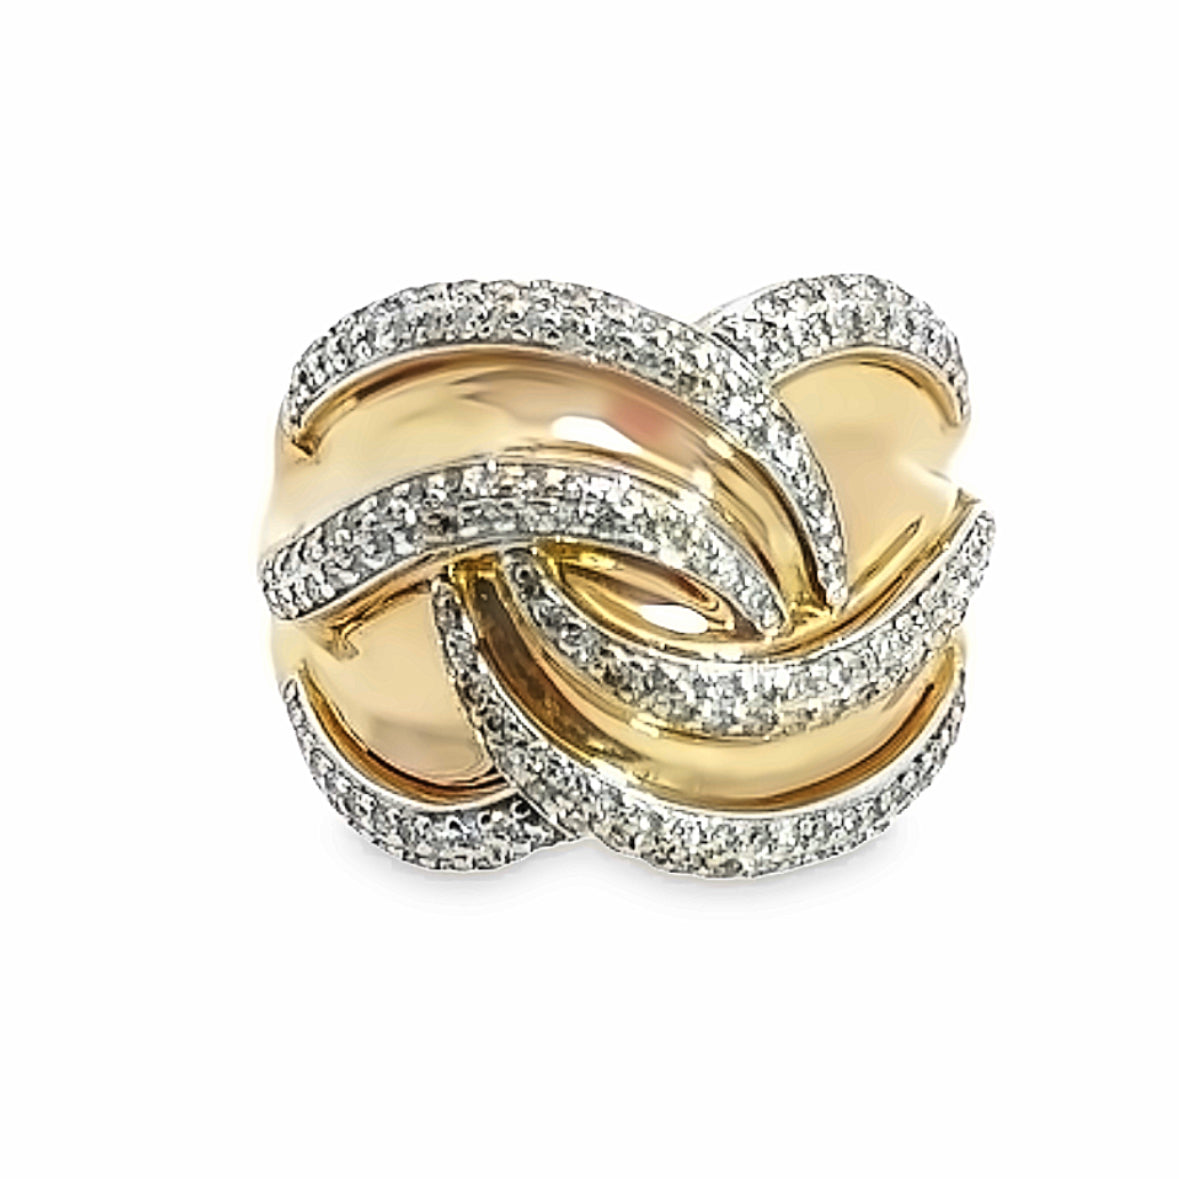 Exquisite 14K Yellow Gold & Diamond Multi-Swirl Cocktail Ring